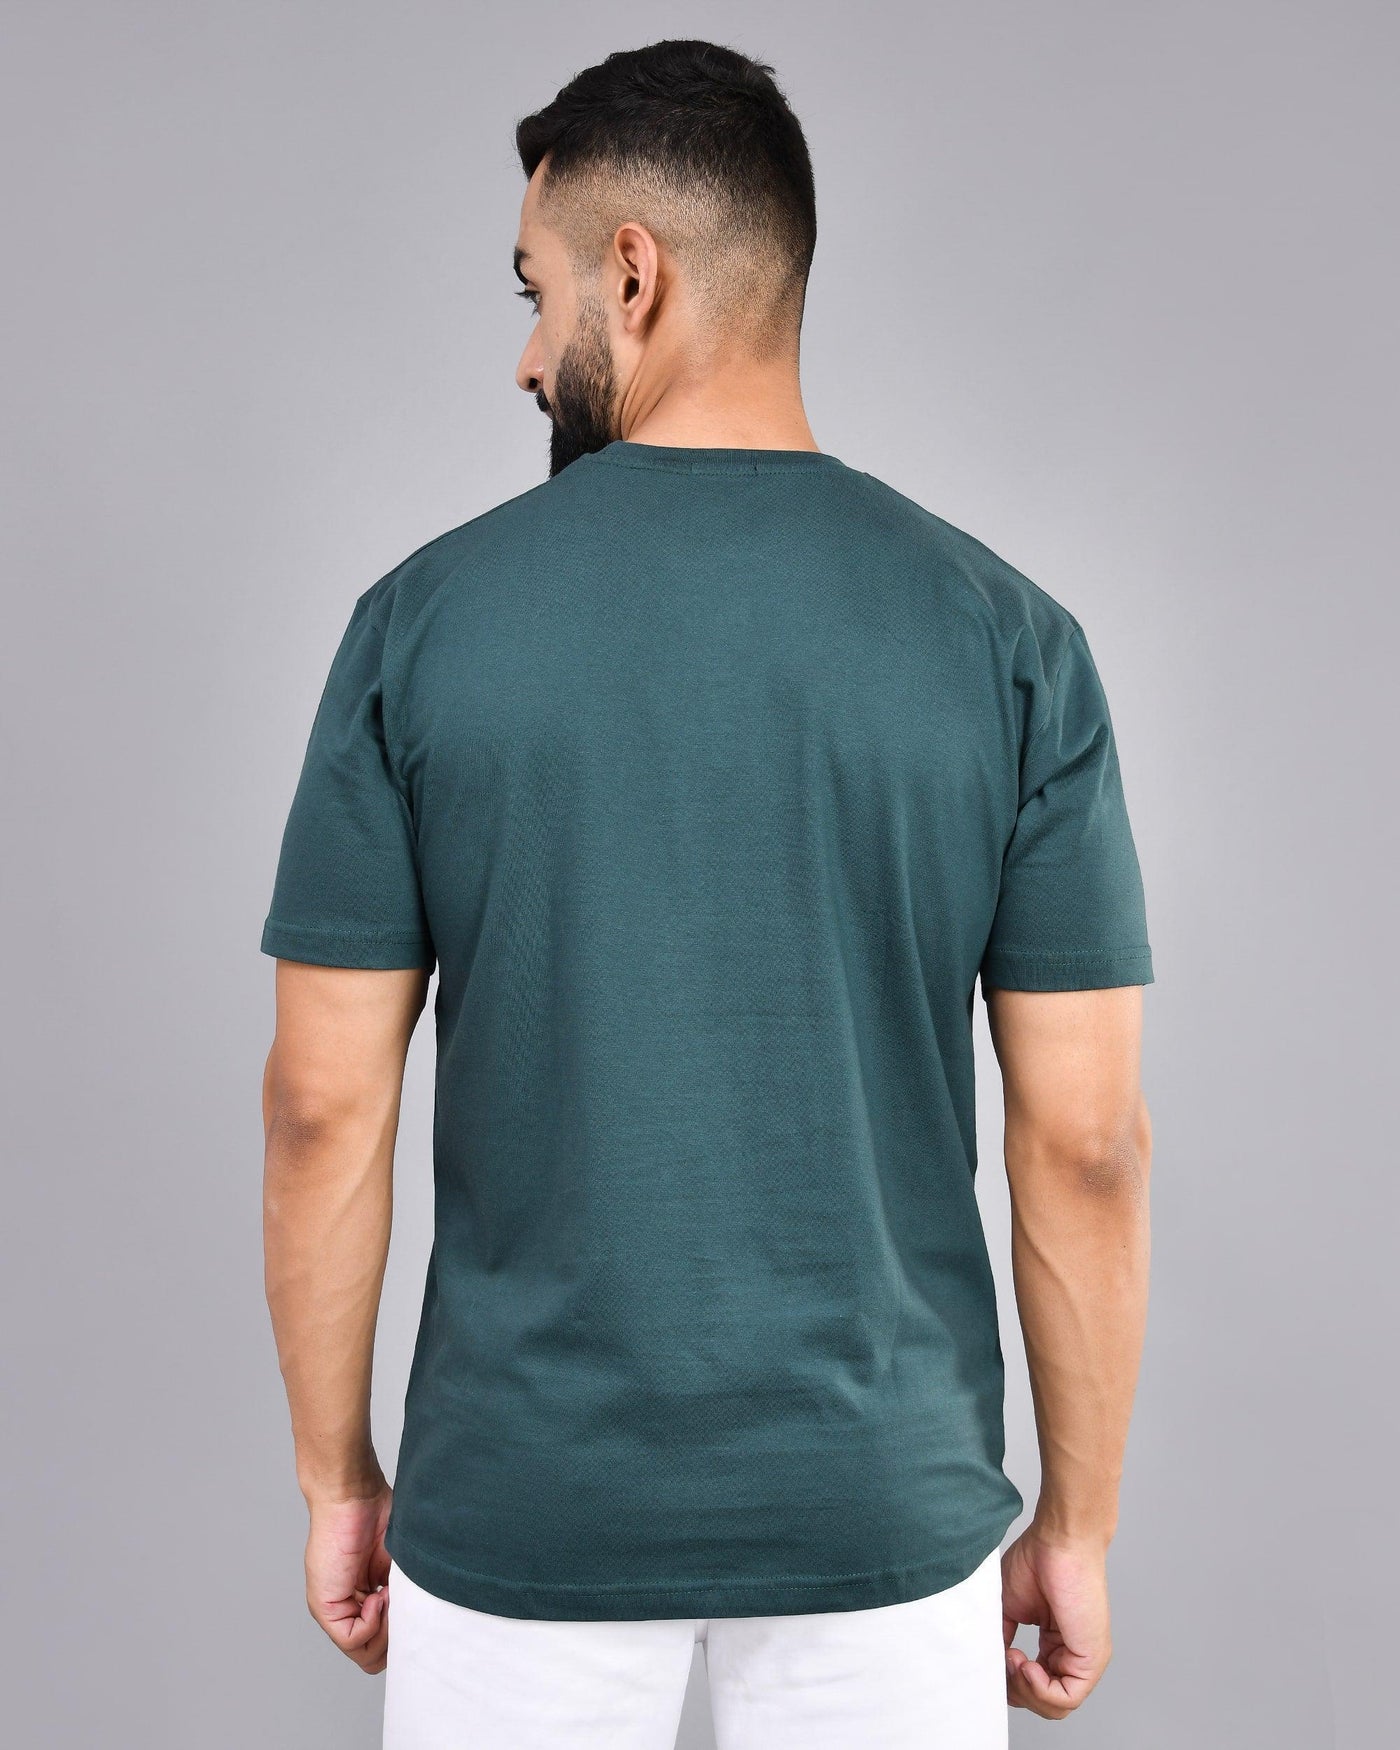 Green Regular Size T-shirt - Wevaste